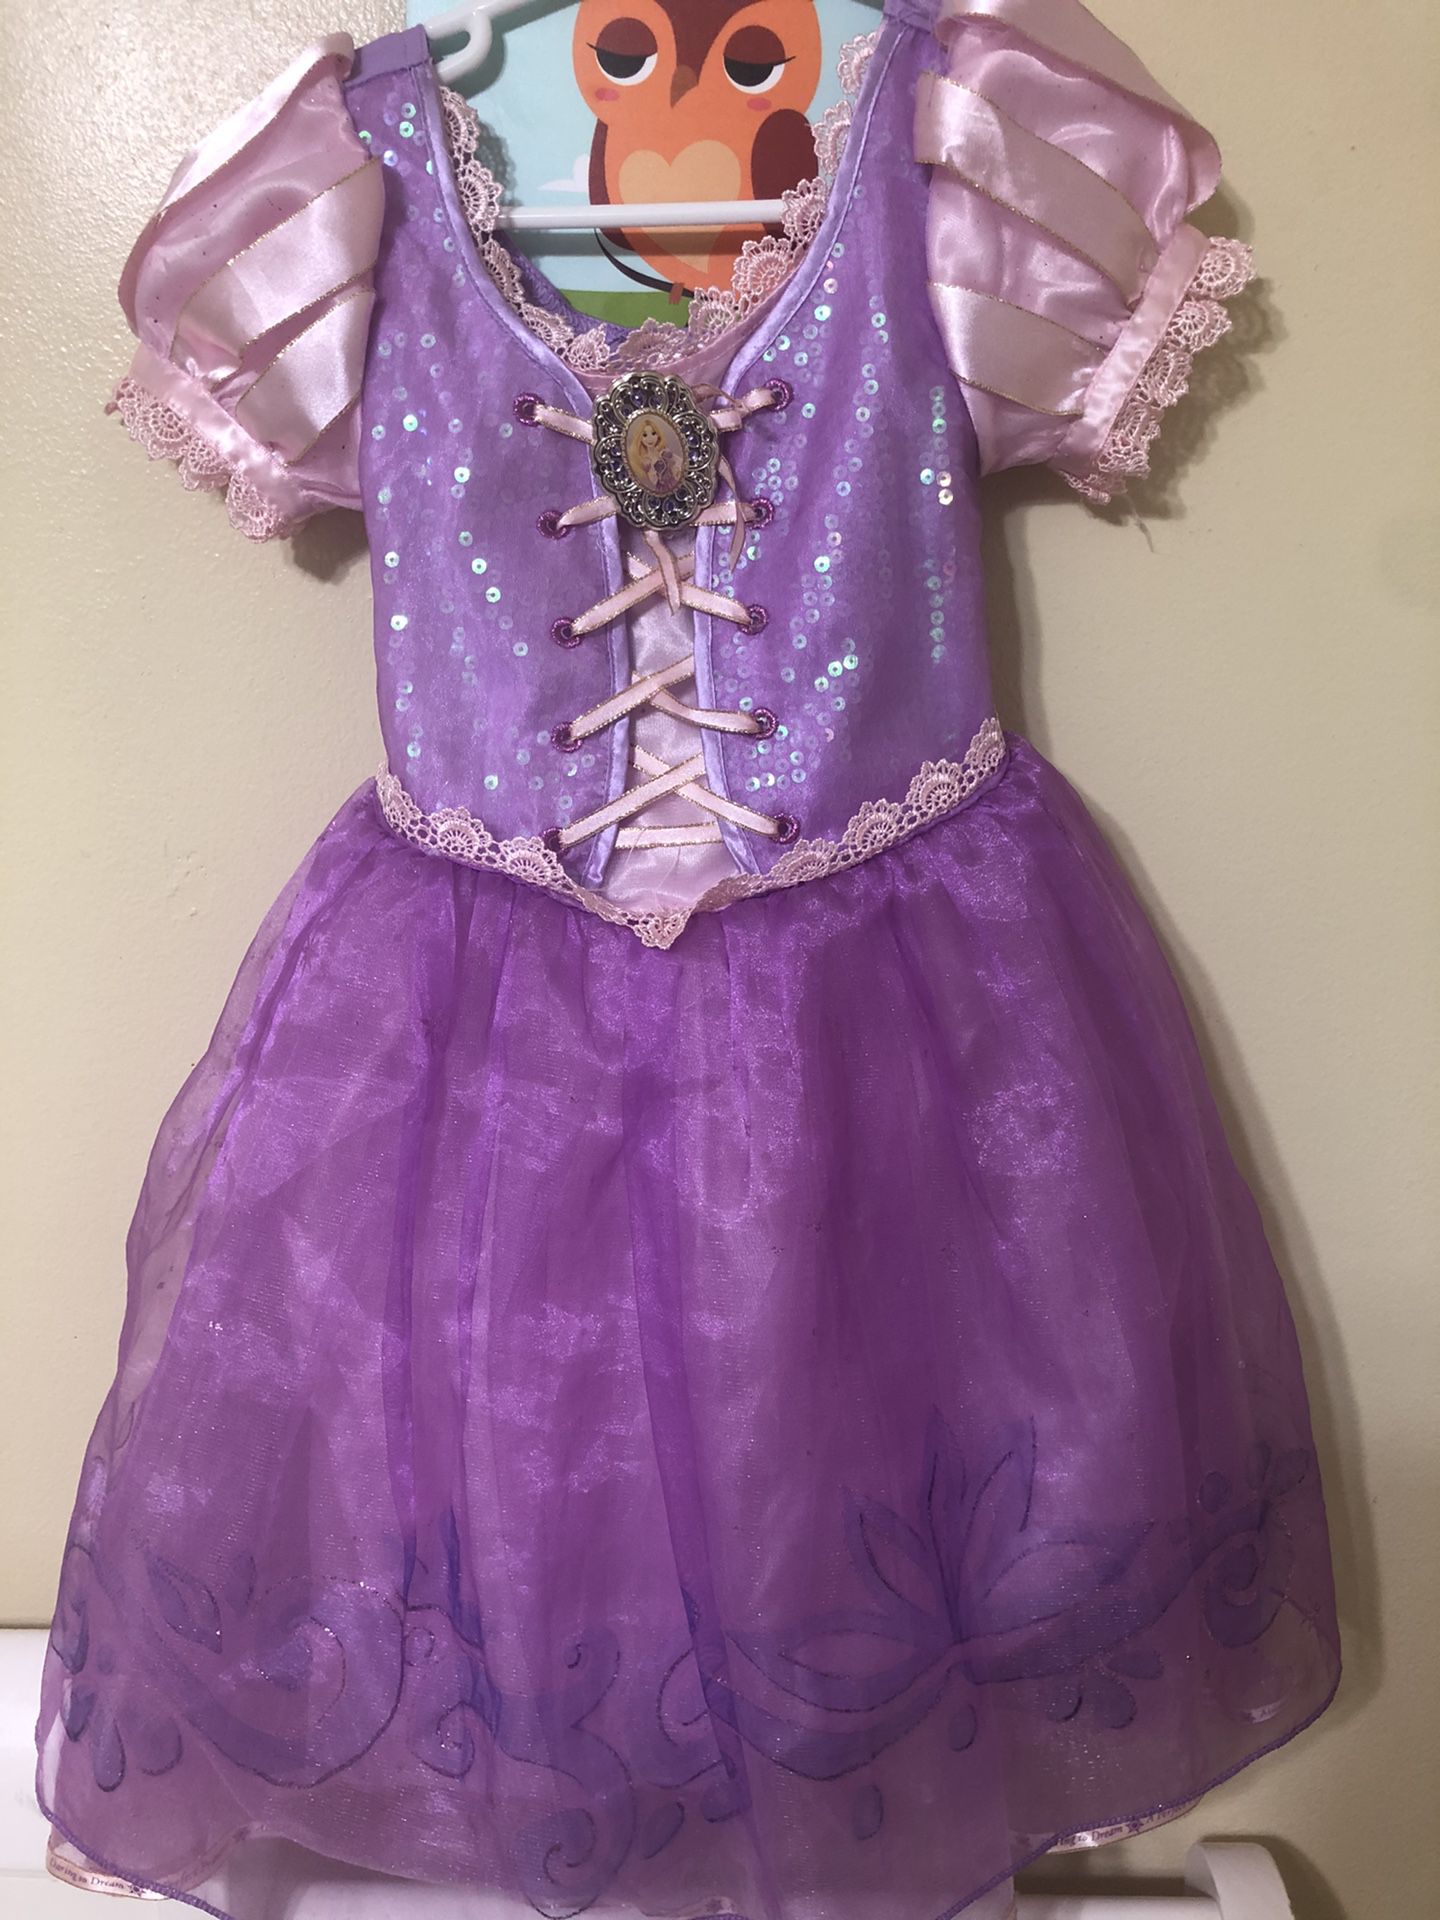 Rapunzel toddler costume size 4